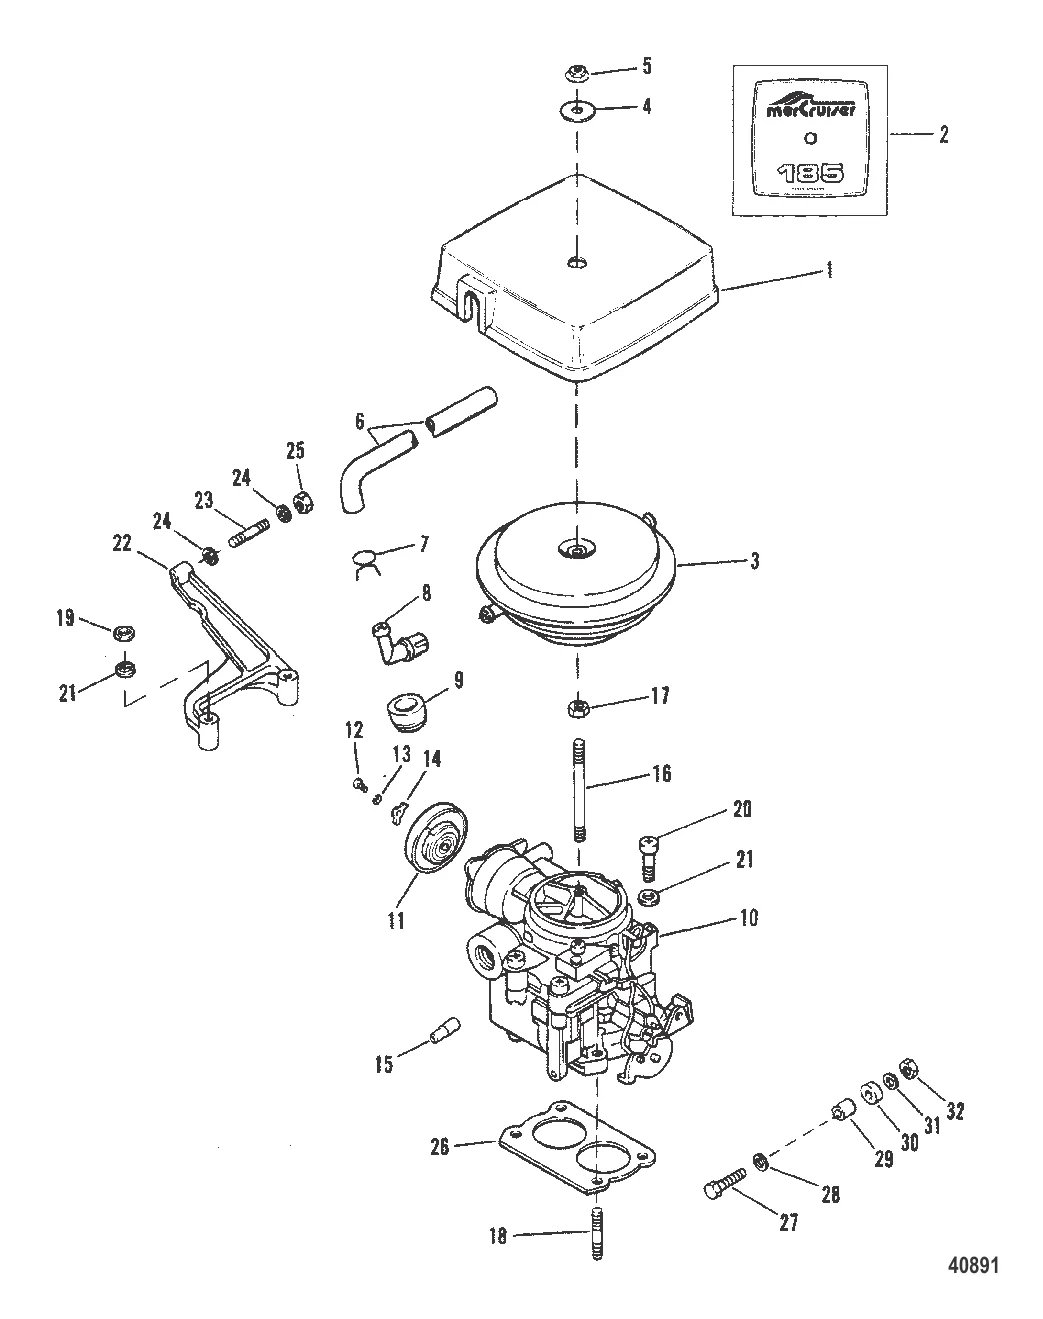 Carburetor & Throttle Linkage (185)